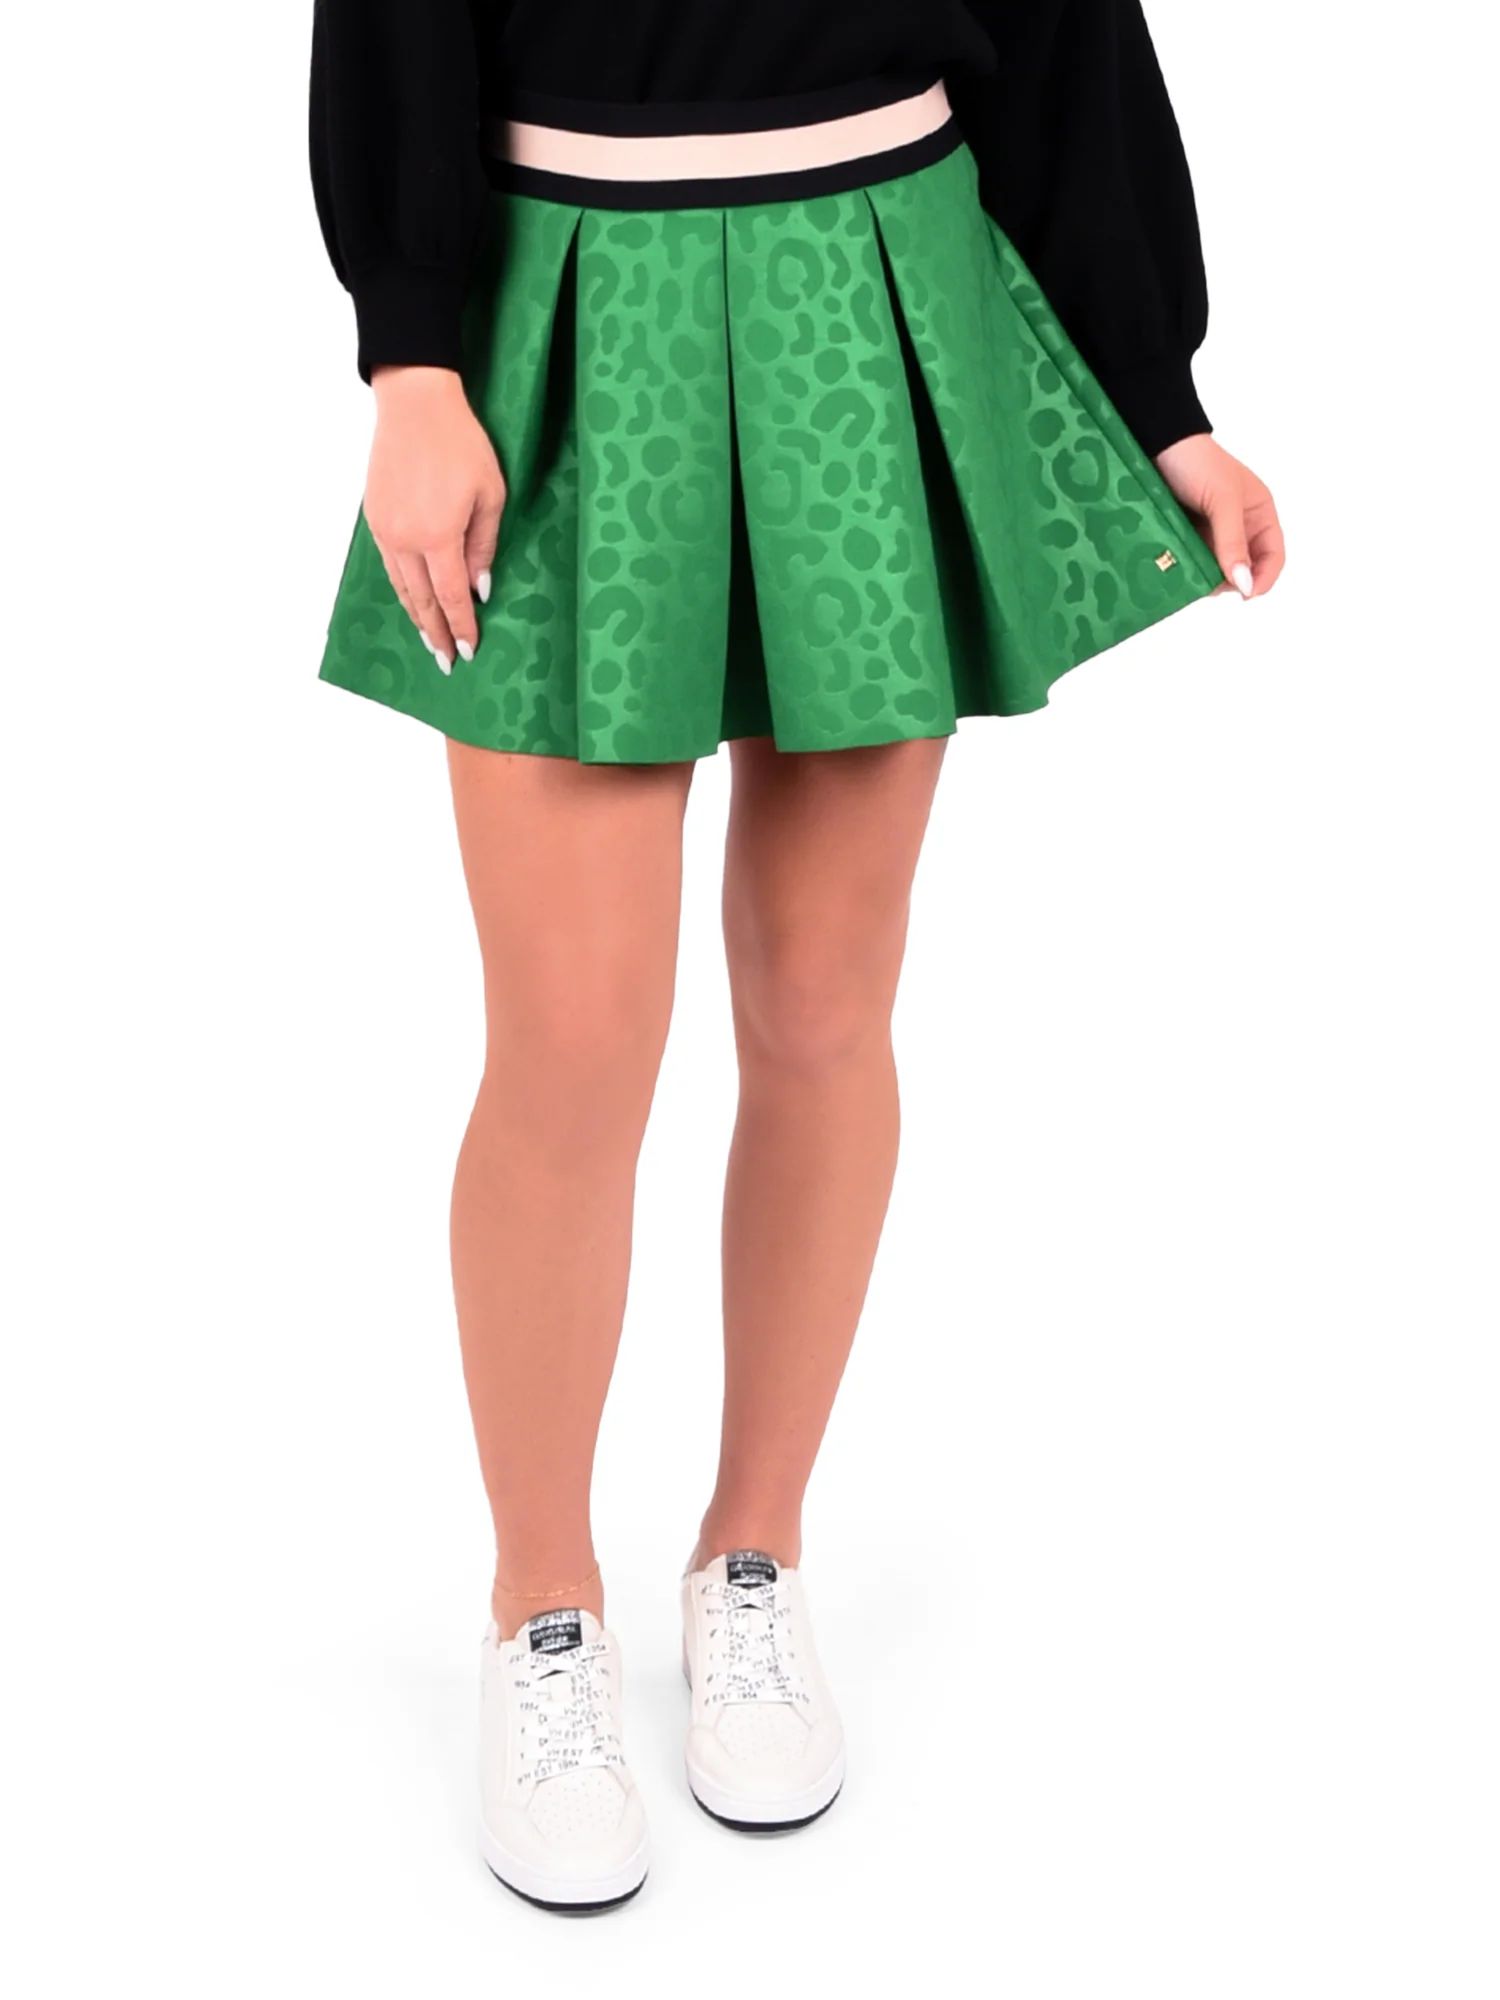 Sydney Skirt - Evergreen Cheetah | Emily McCarthy